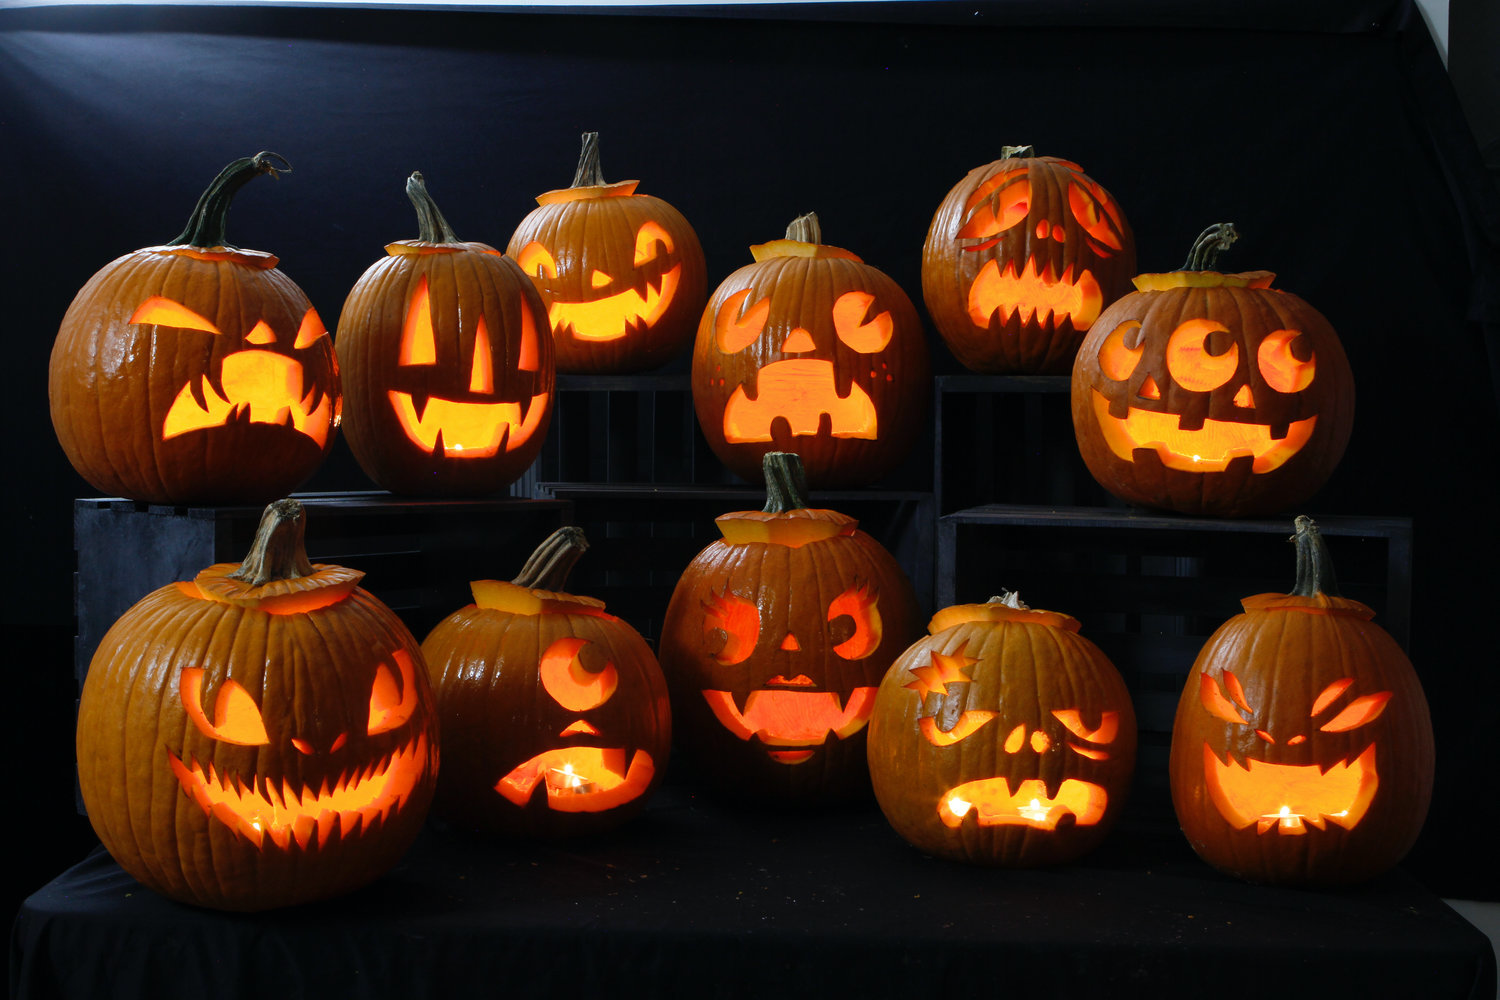 Famous Ideas Jack O Lantern Faces Halloween Ideas